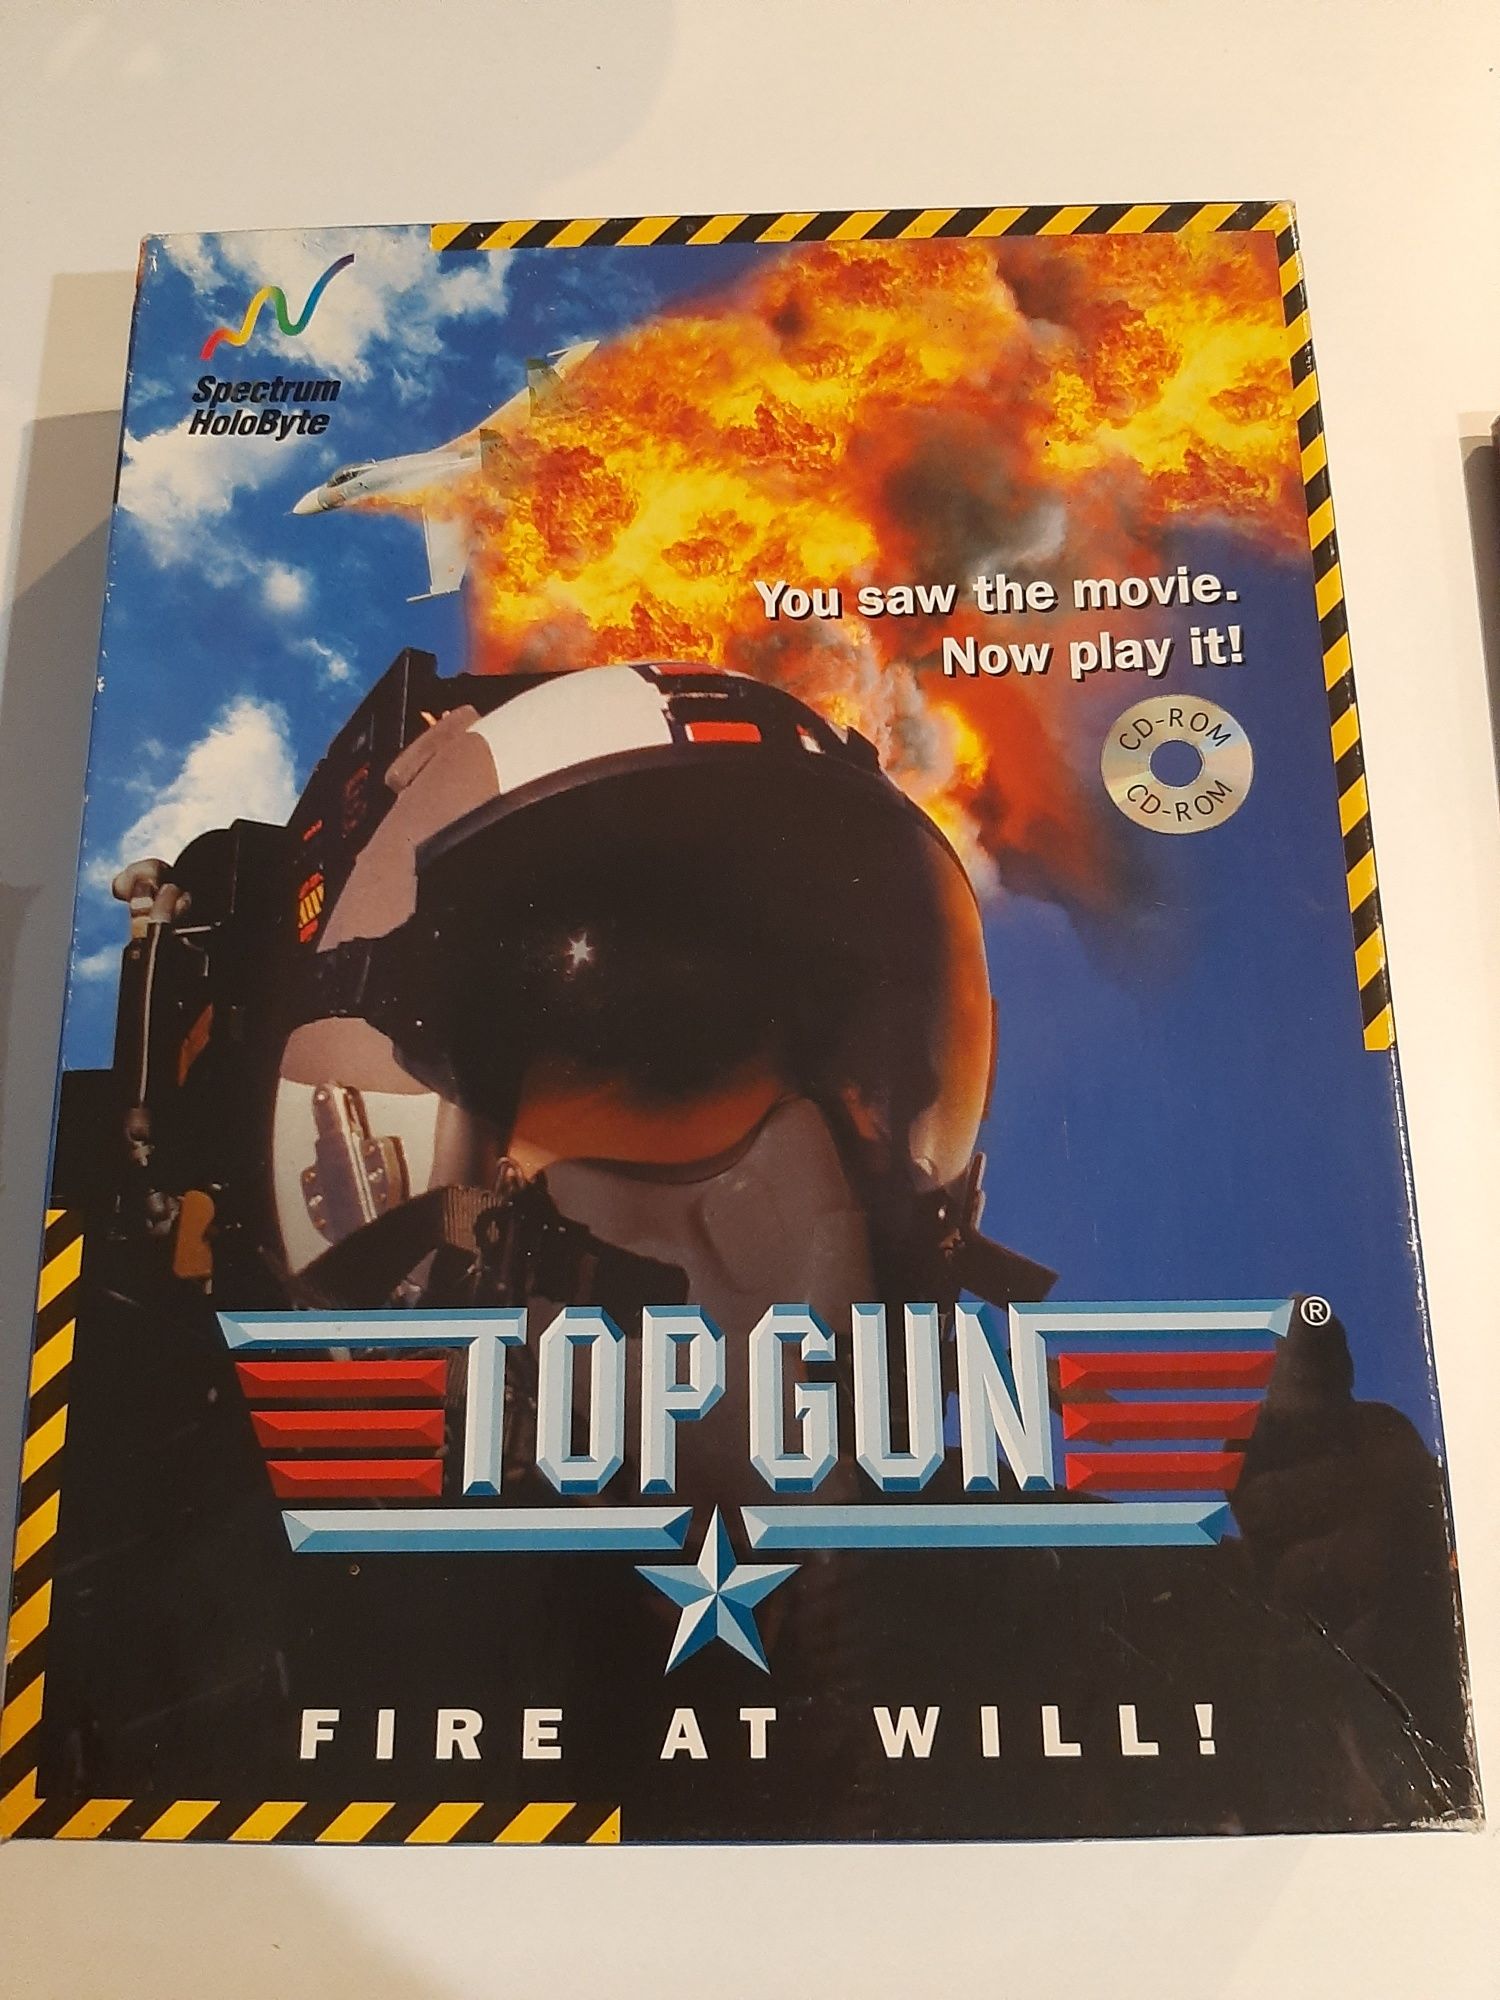 Top gun fire at will box